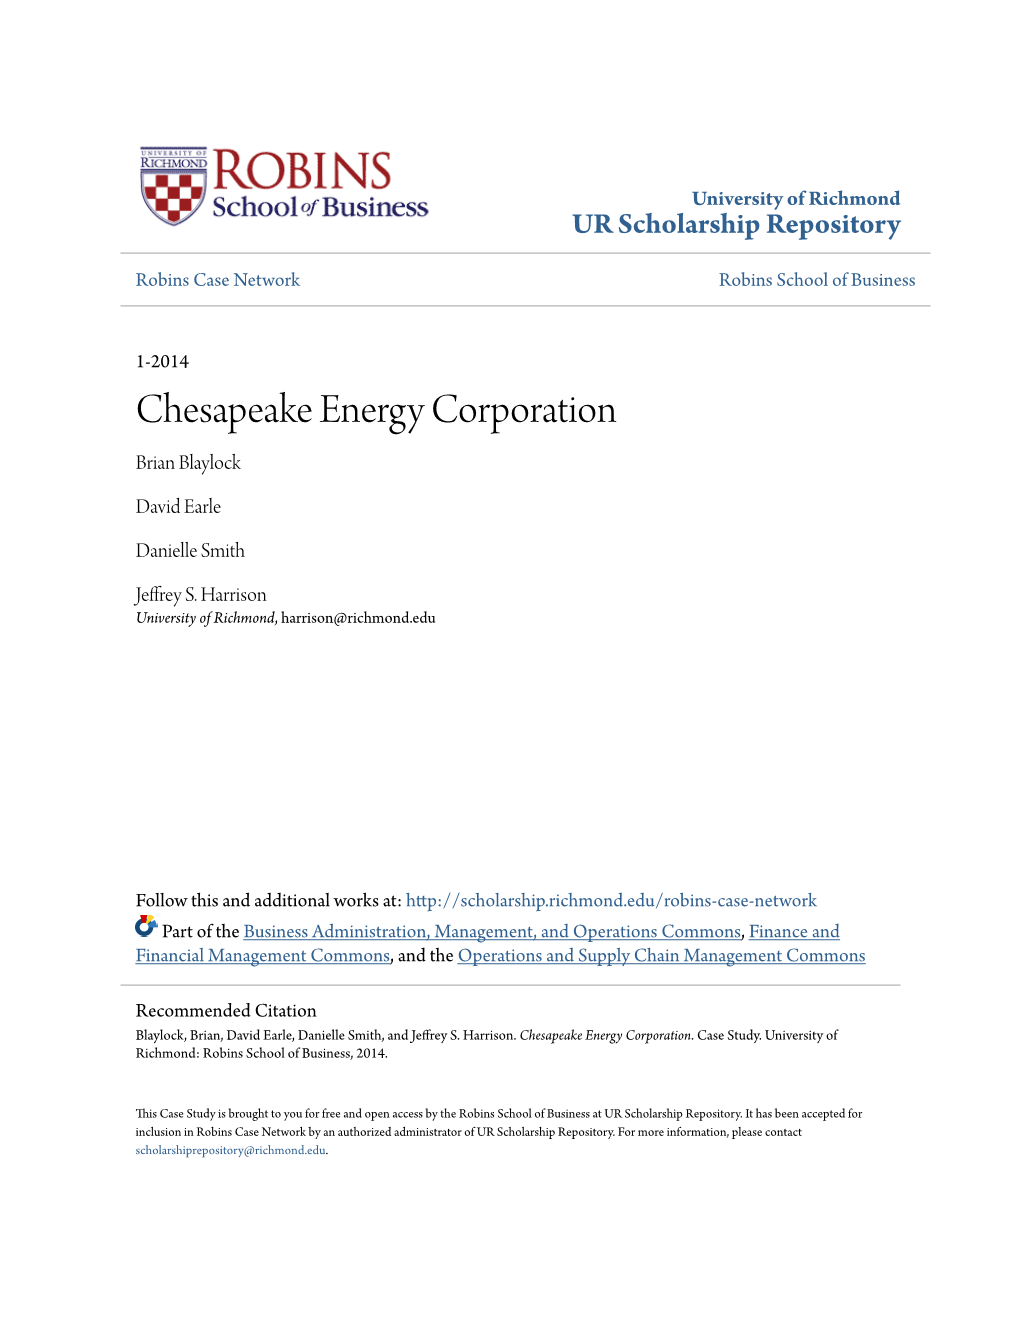 Chesapeake Energy Corporation Brian Blaylock